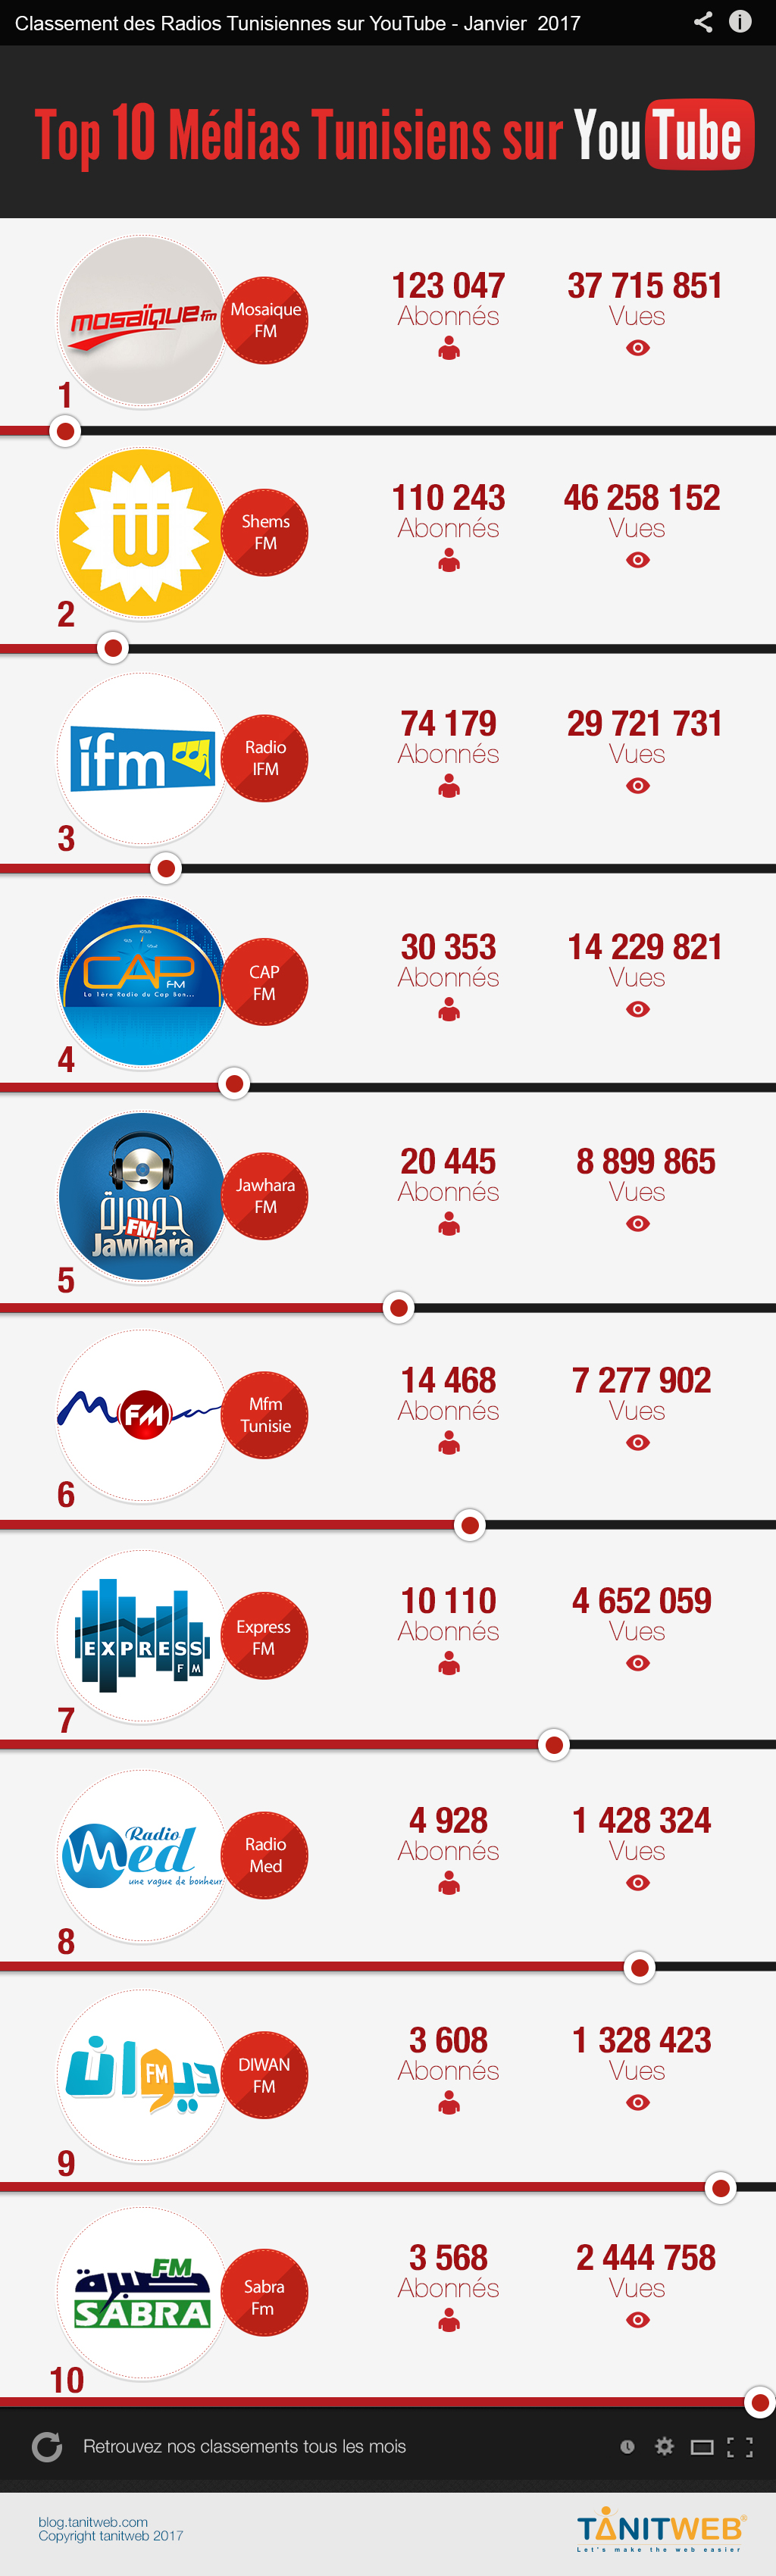 TOP 10 des Radios Tunisiennes sur YouTube